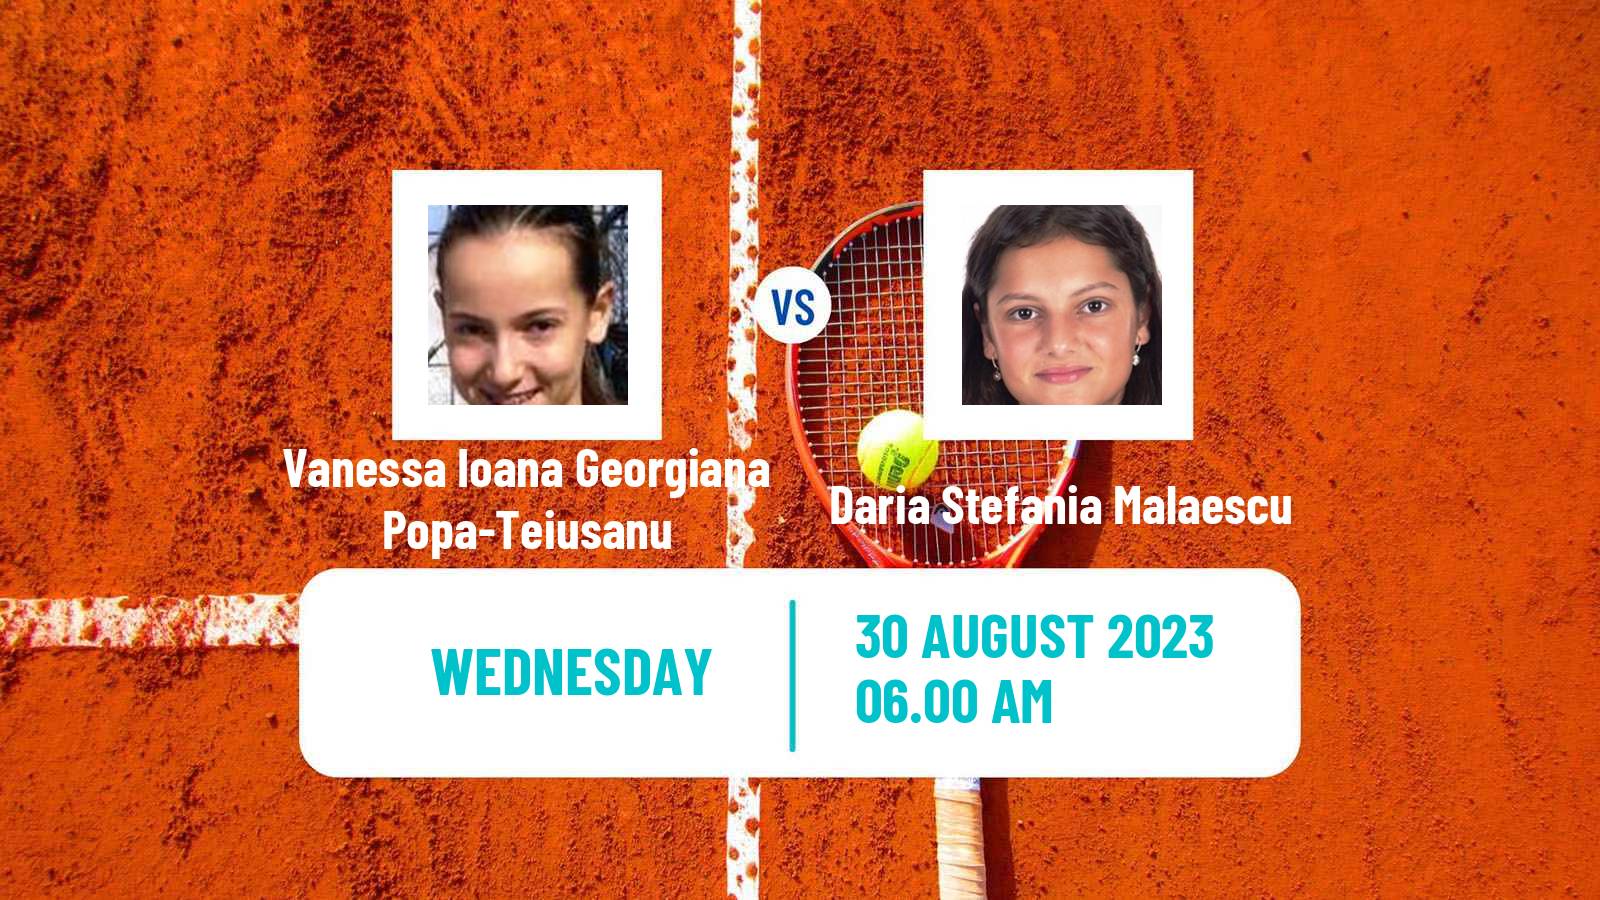 Tennis ITF W15 Brasov 2 Women Vanessa Ioana Georgiana Popa-Teiusanu - Daria Stefania Malaescu